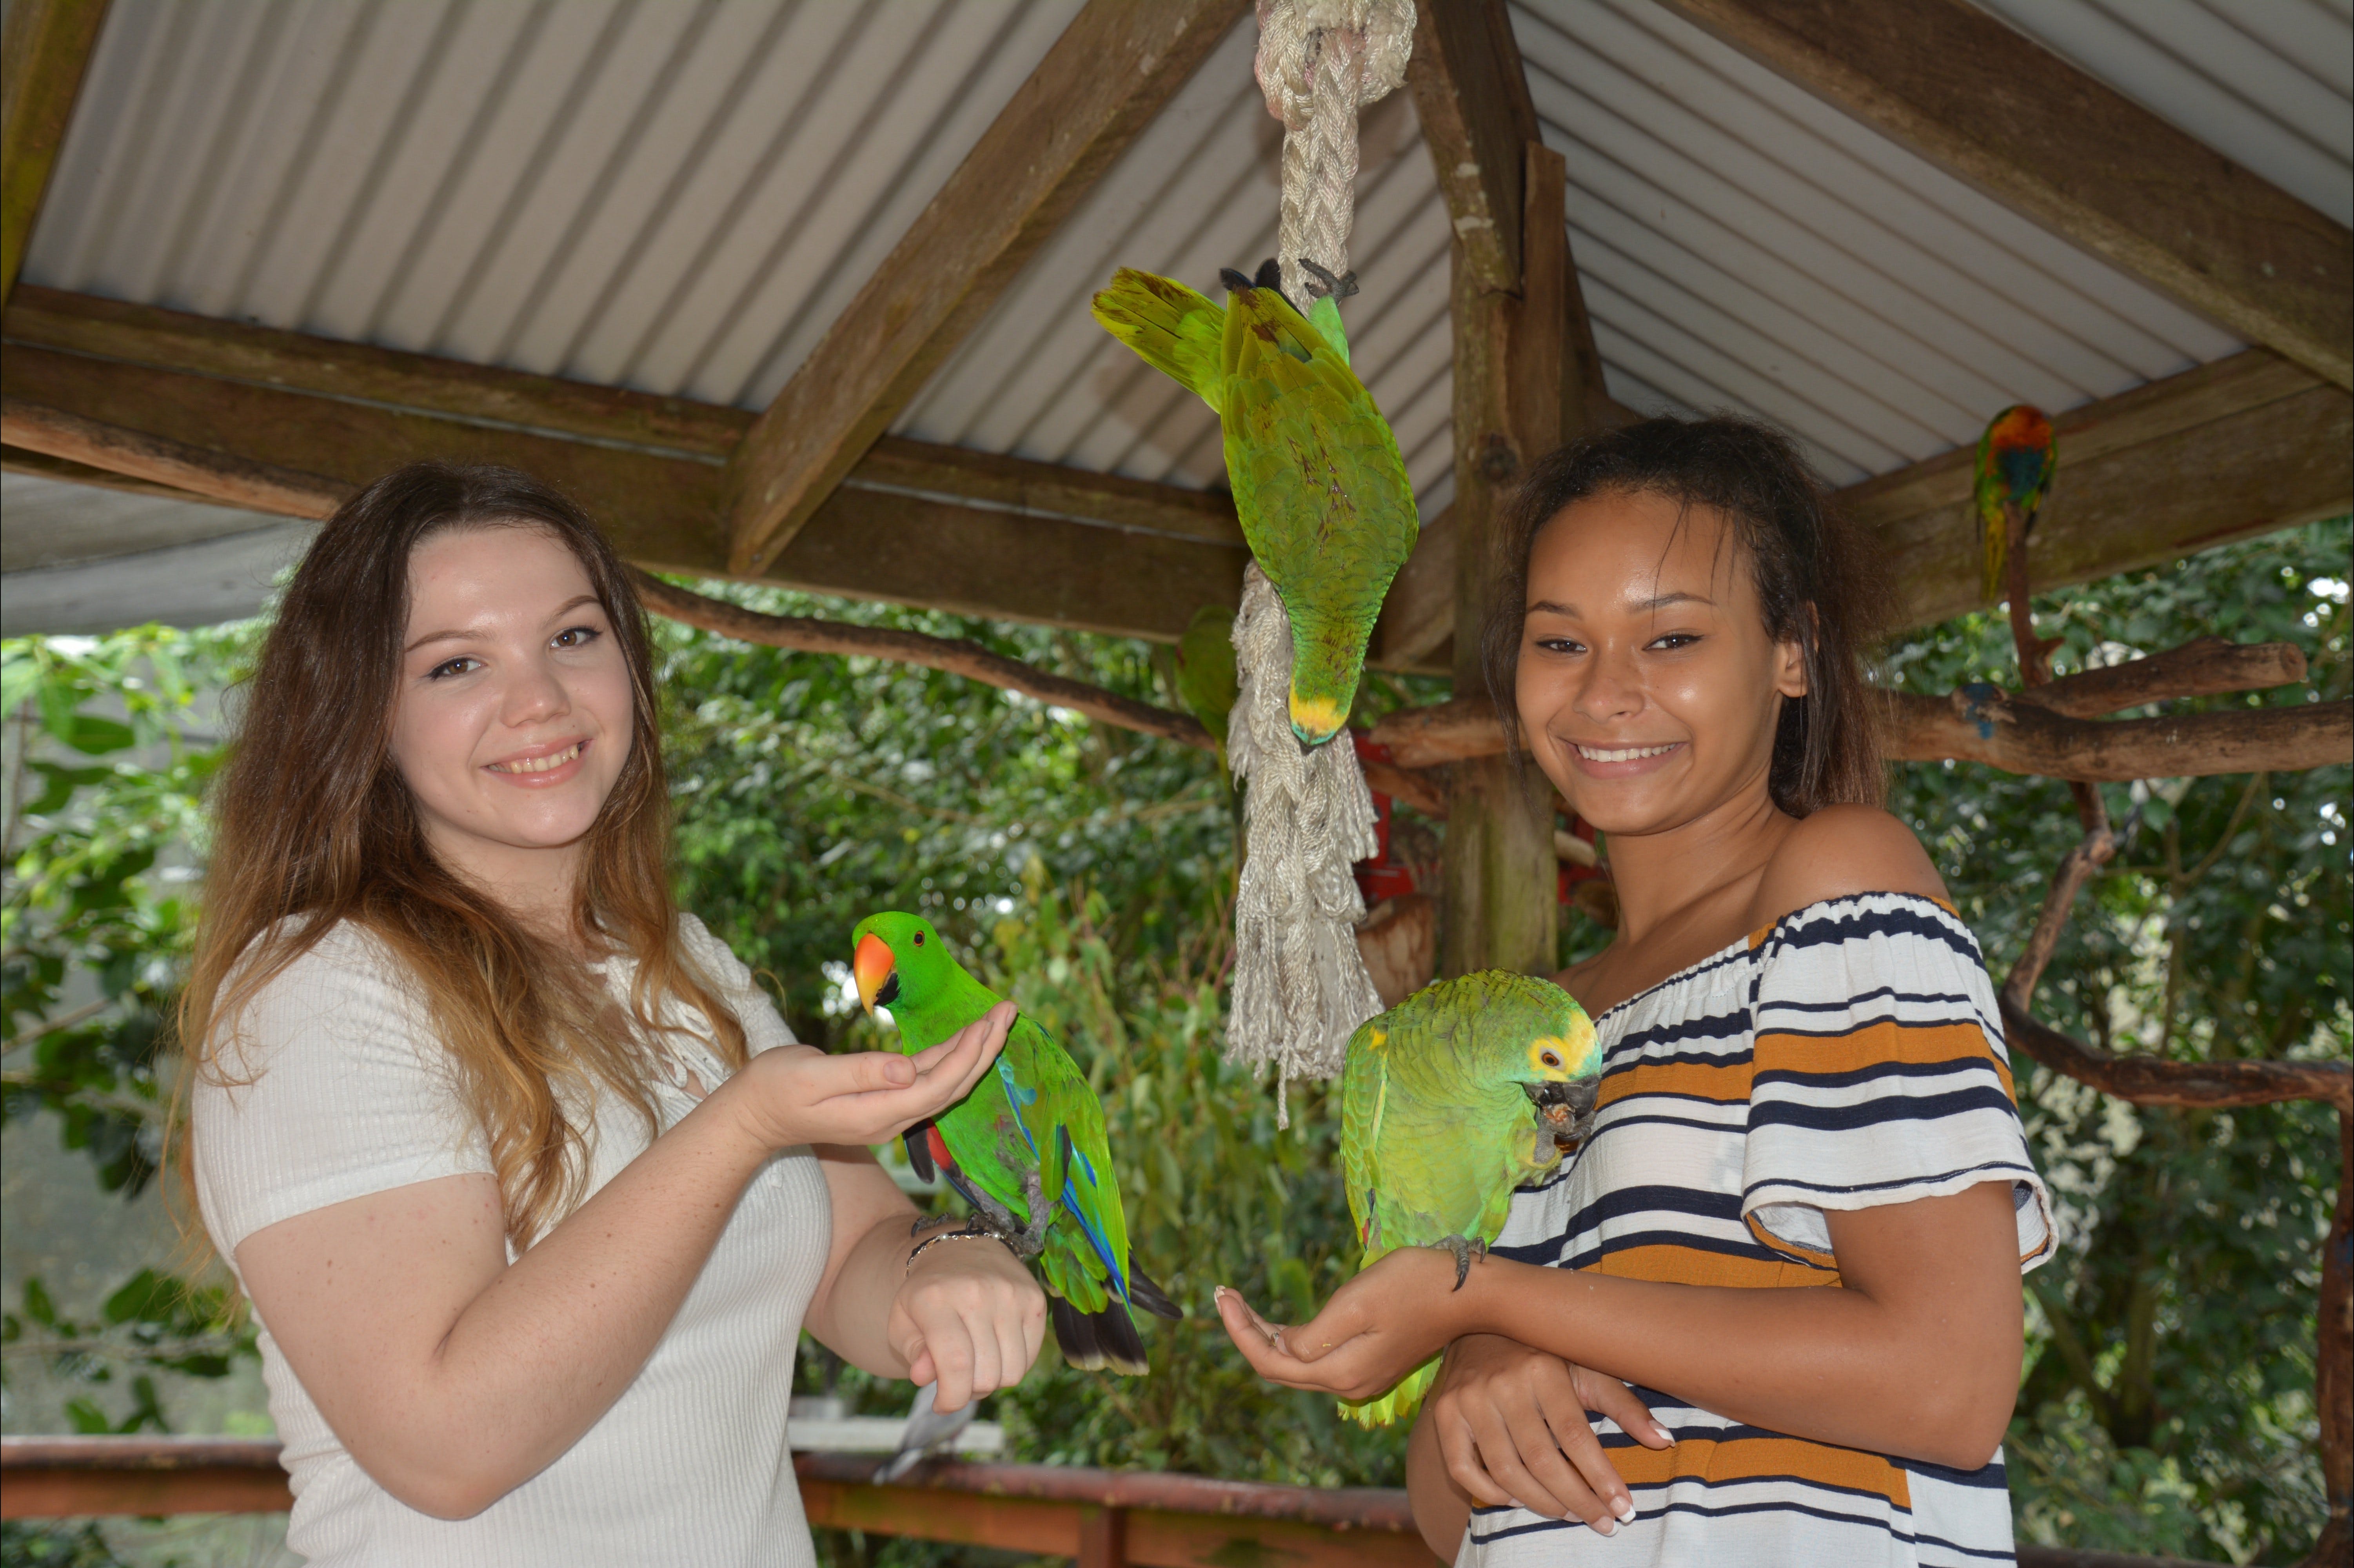 Birdworld Kuranda - Tourism Cairns